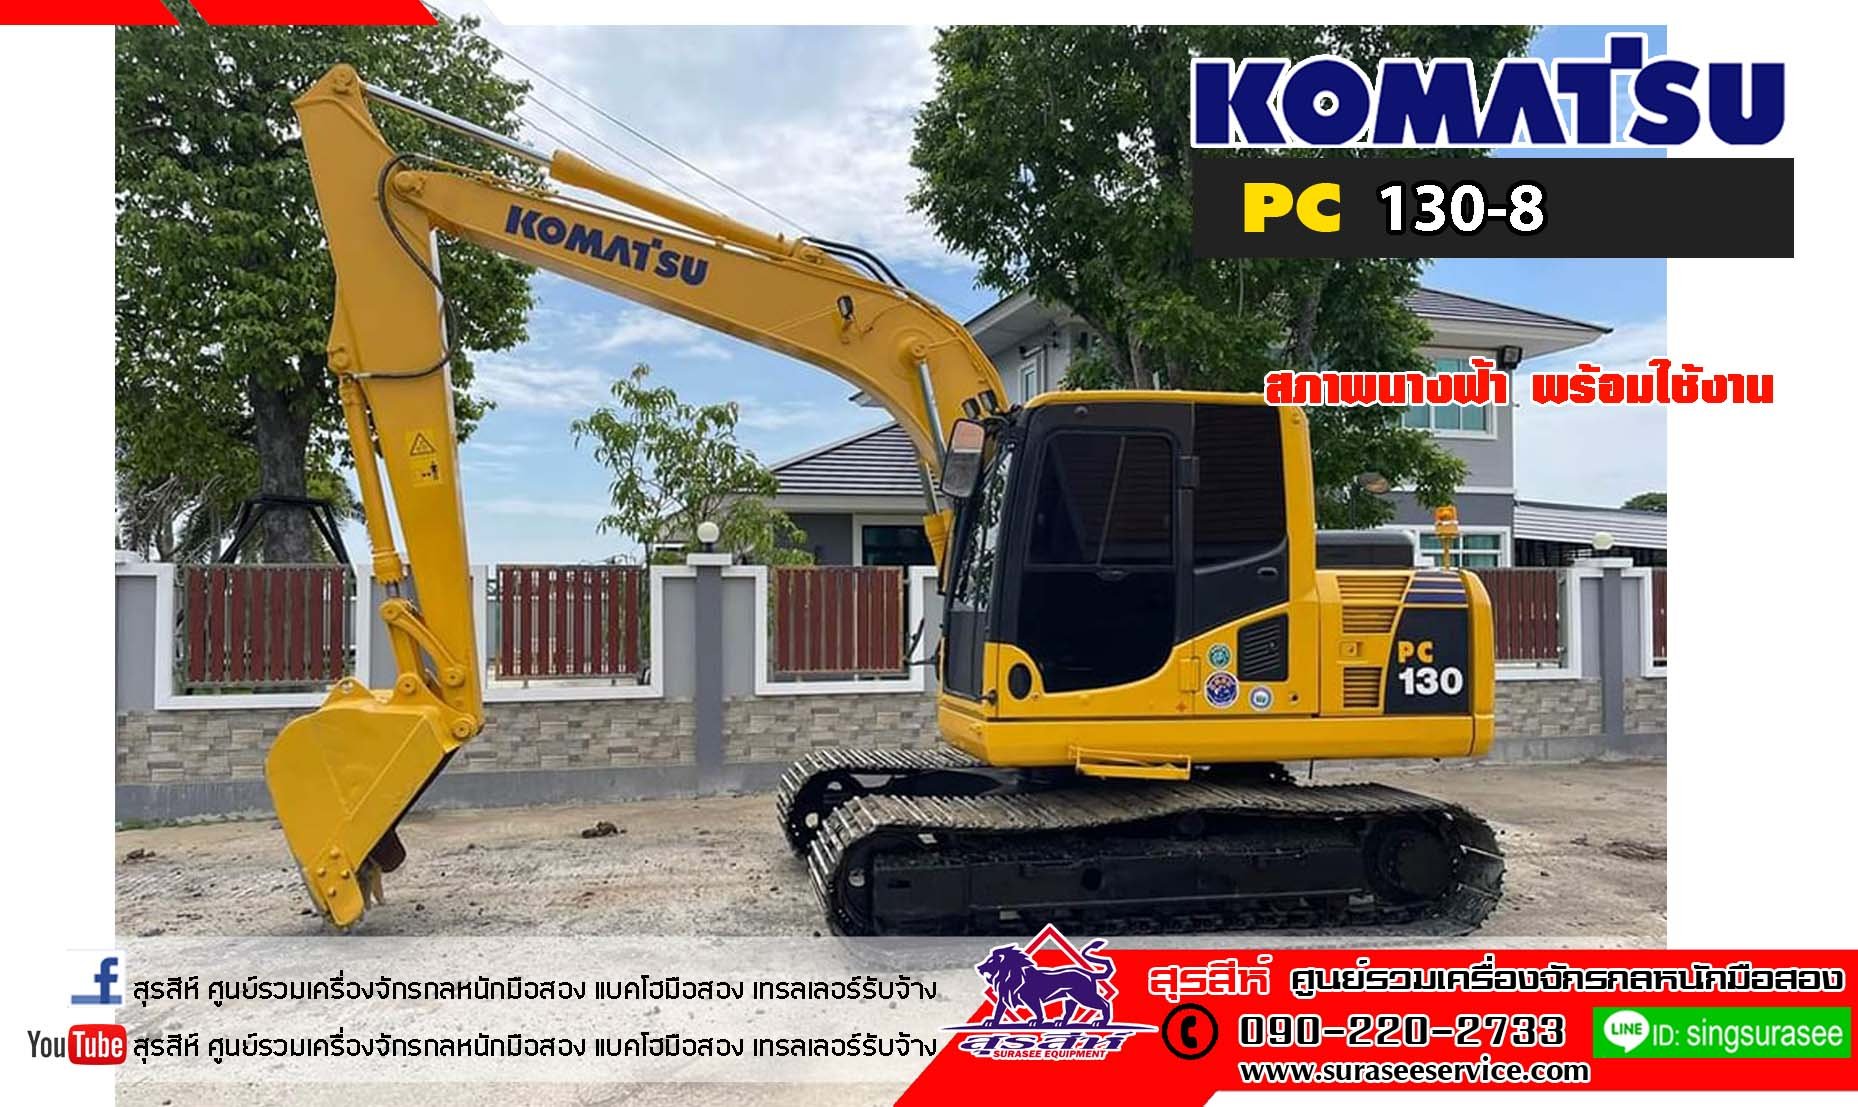 KOMATSU PC130-8 รถบริษัท บำรุงรักษาดี สภาพดี